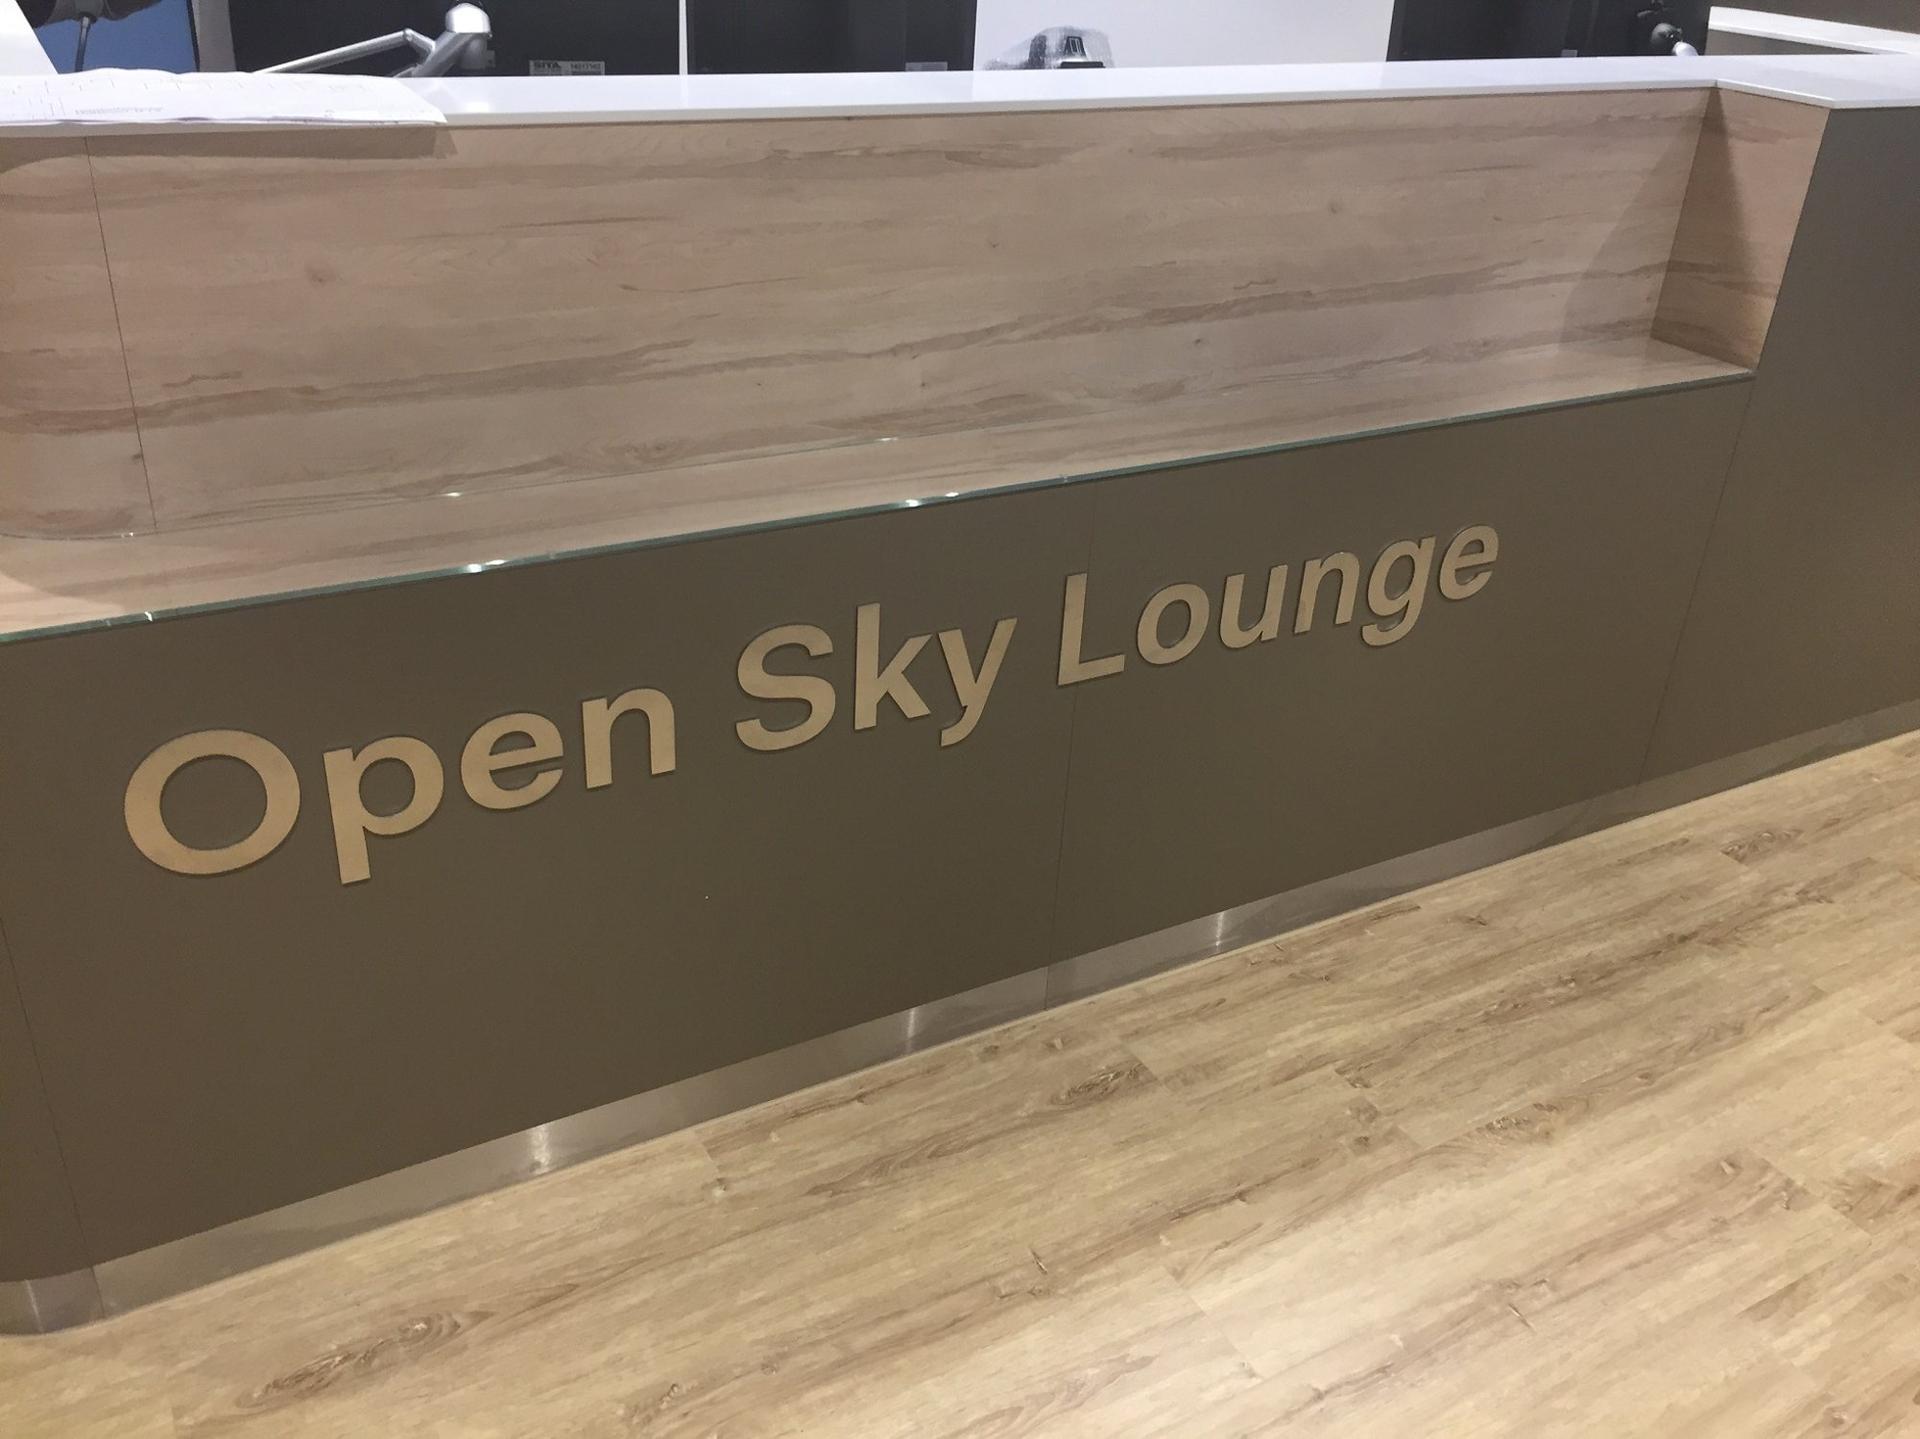 Open Sky Lounge image 4 of 7